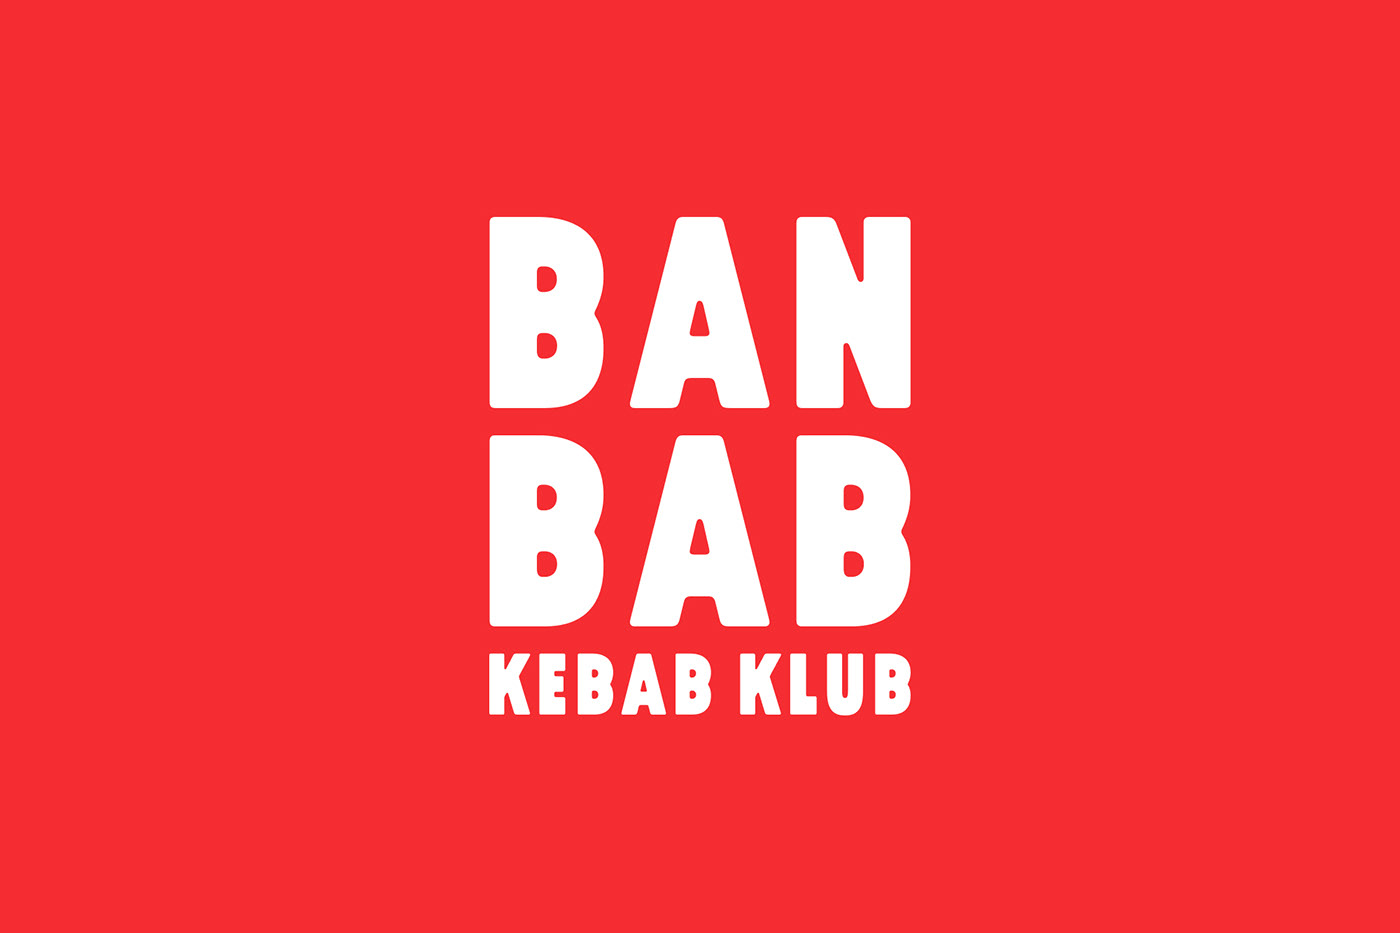 kebab restaurant bar branding  hamburg germany klub